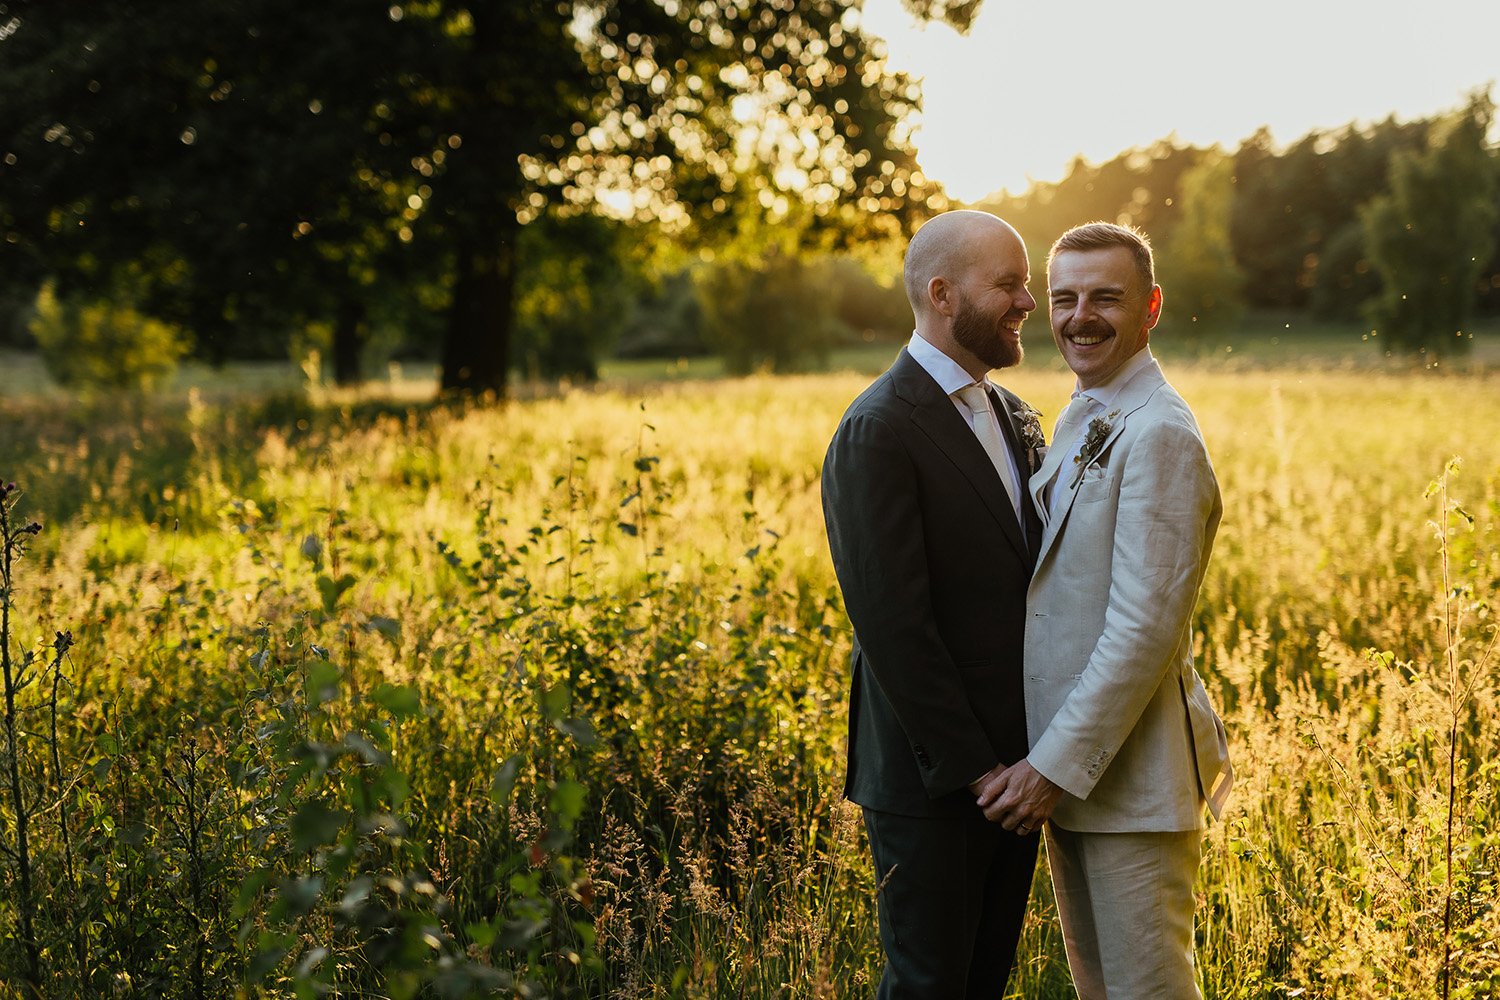 same sex wedding portrait in a field at golden hour